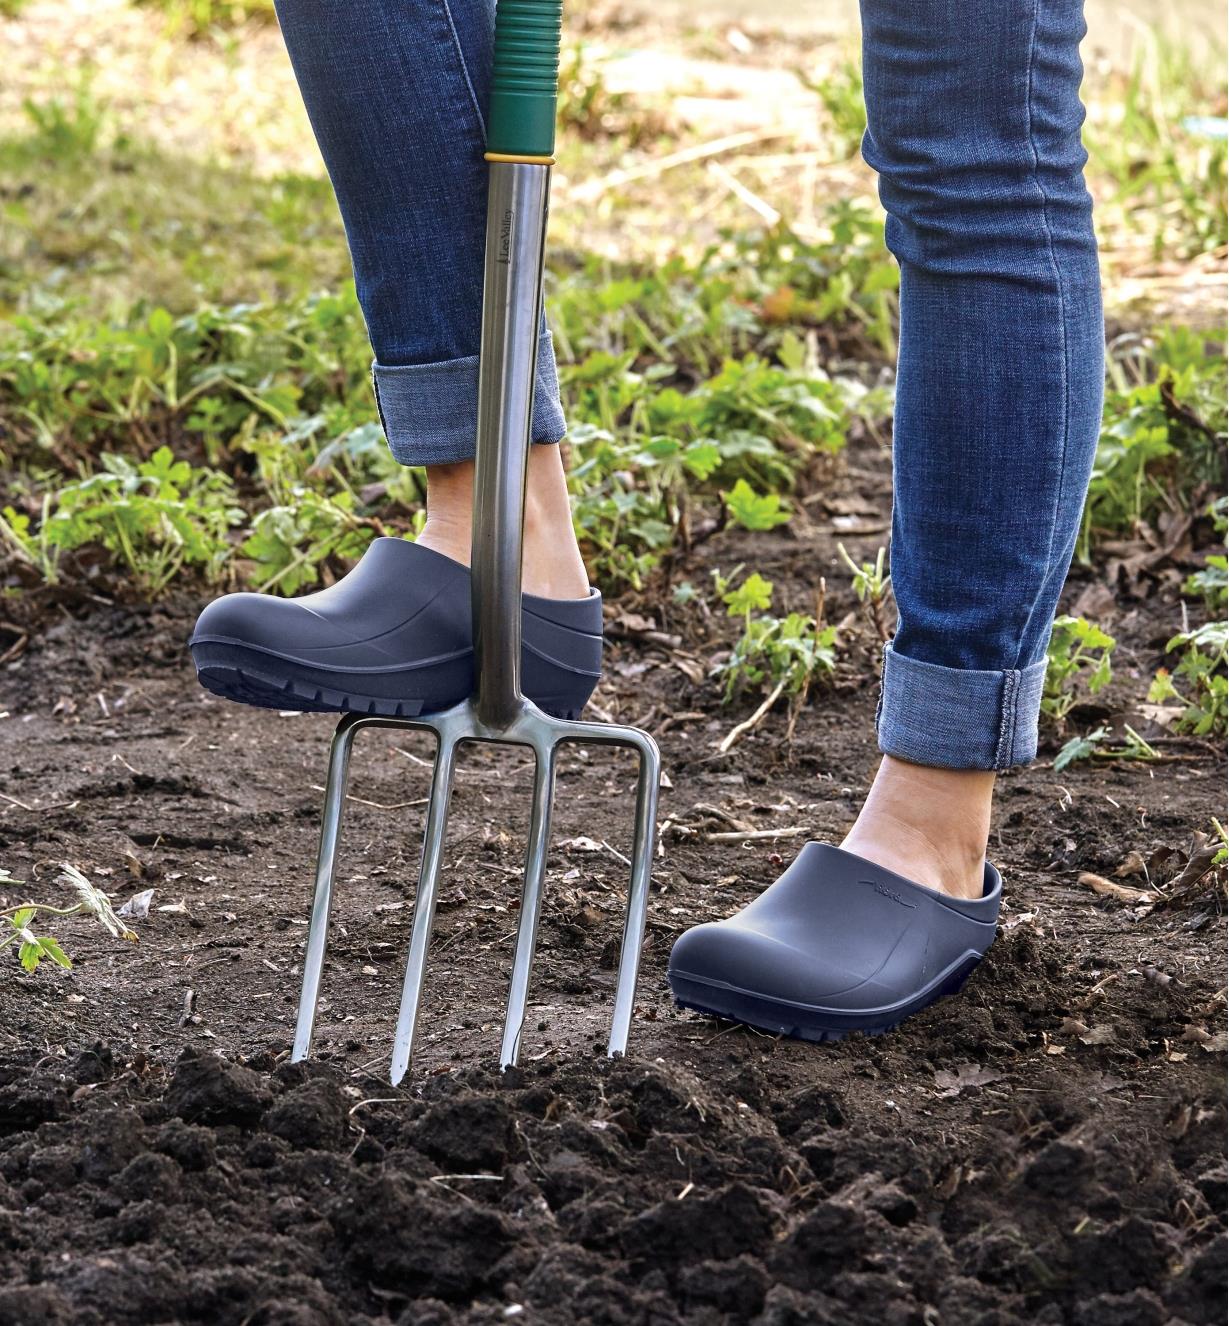 A woman wears European garden clogs while using a garden fork to loosen soil in a planting bed 